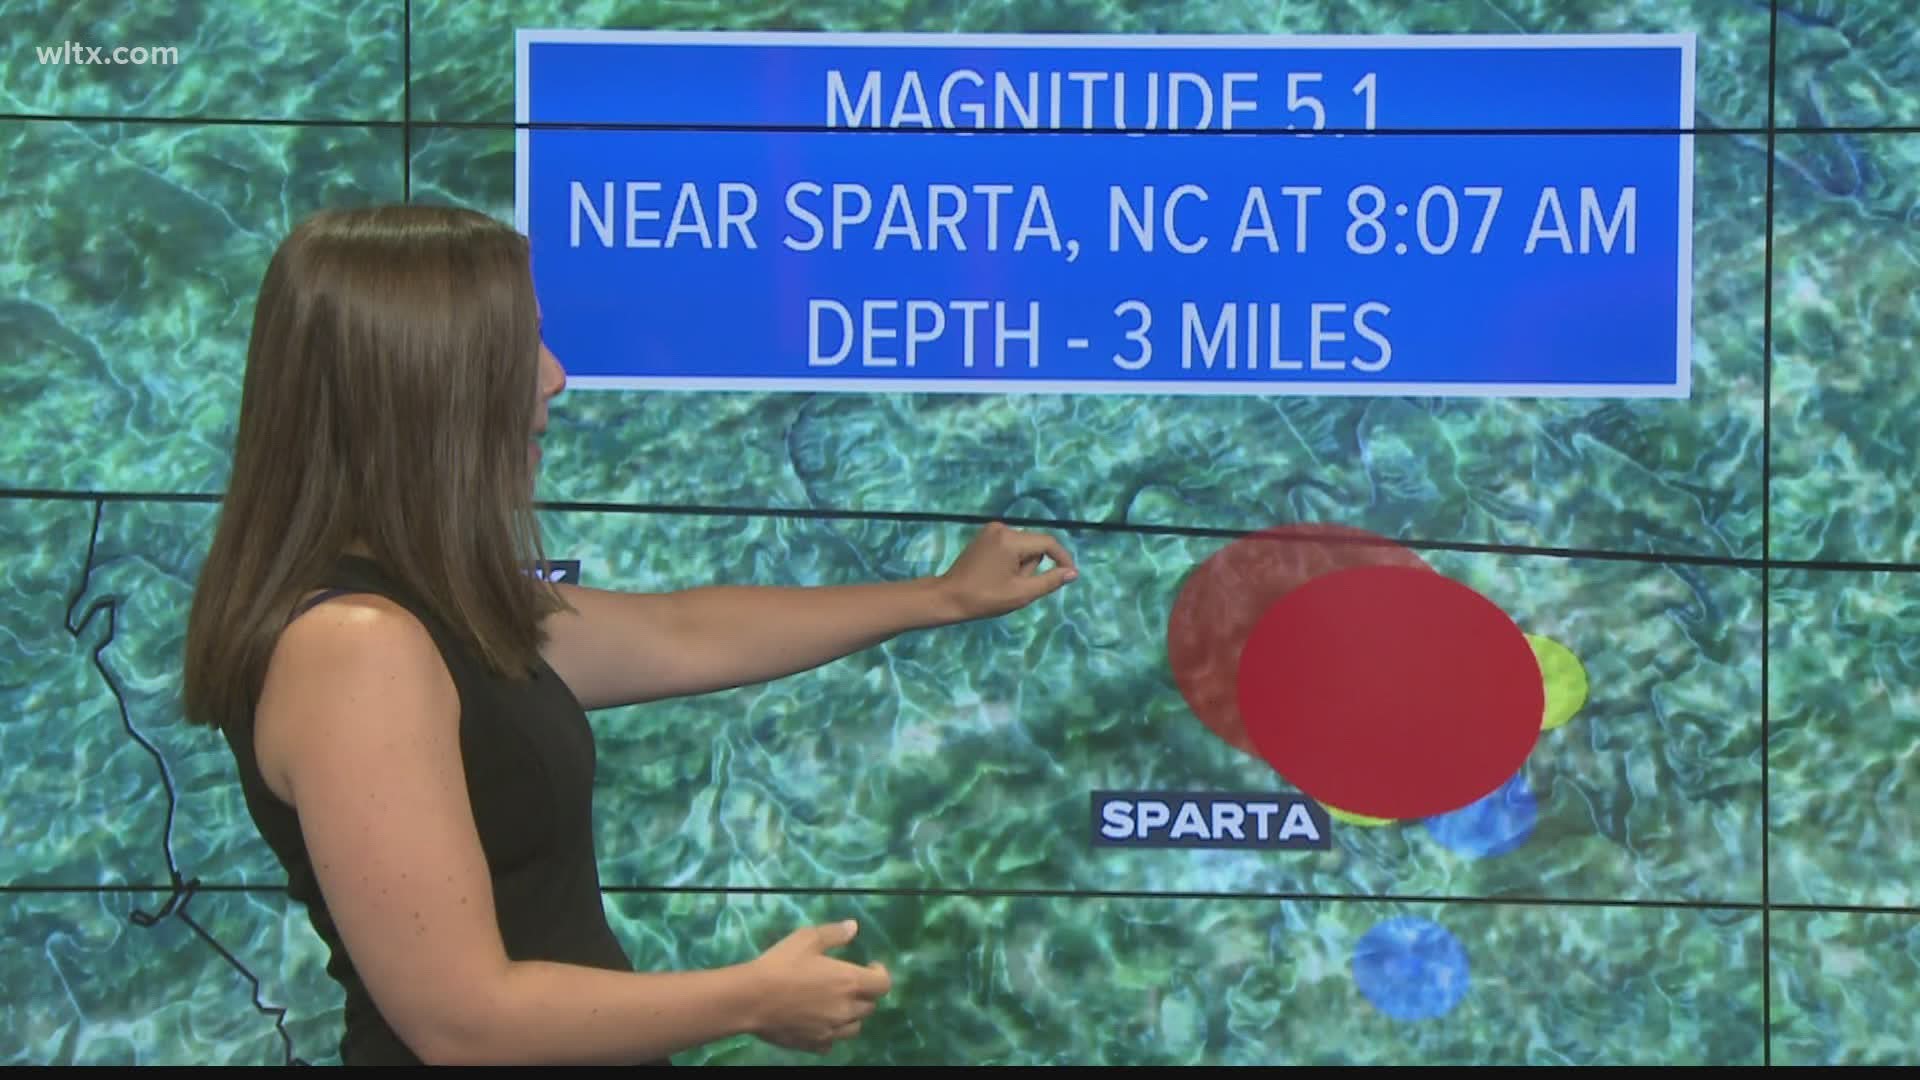 The 5.1 earthquake occurred around 8 a.m. near in Sparta, NC near the Virginia border.